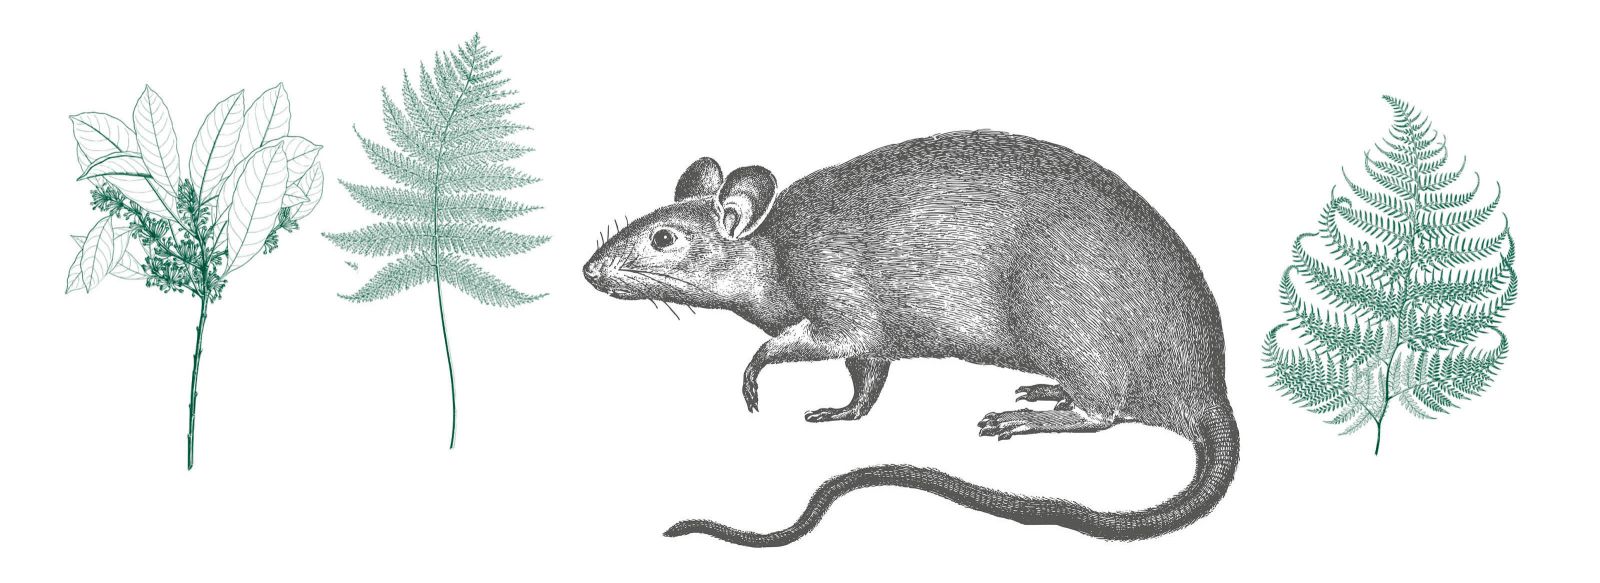 Line art illustration of a rat and ferns.